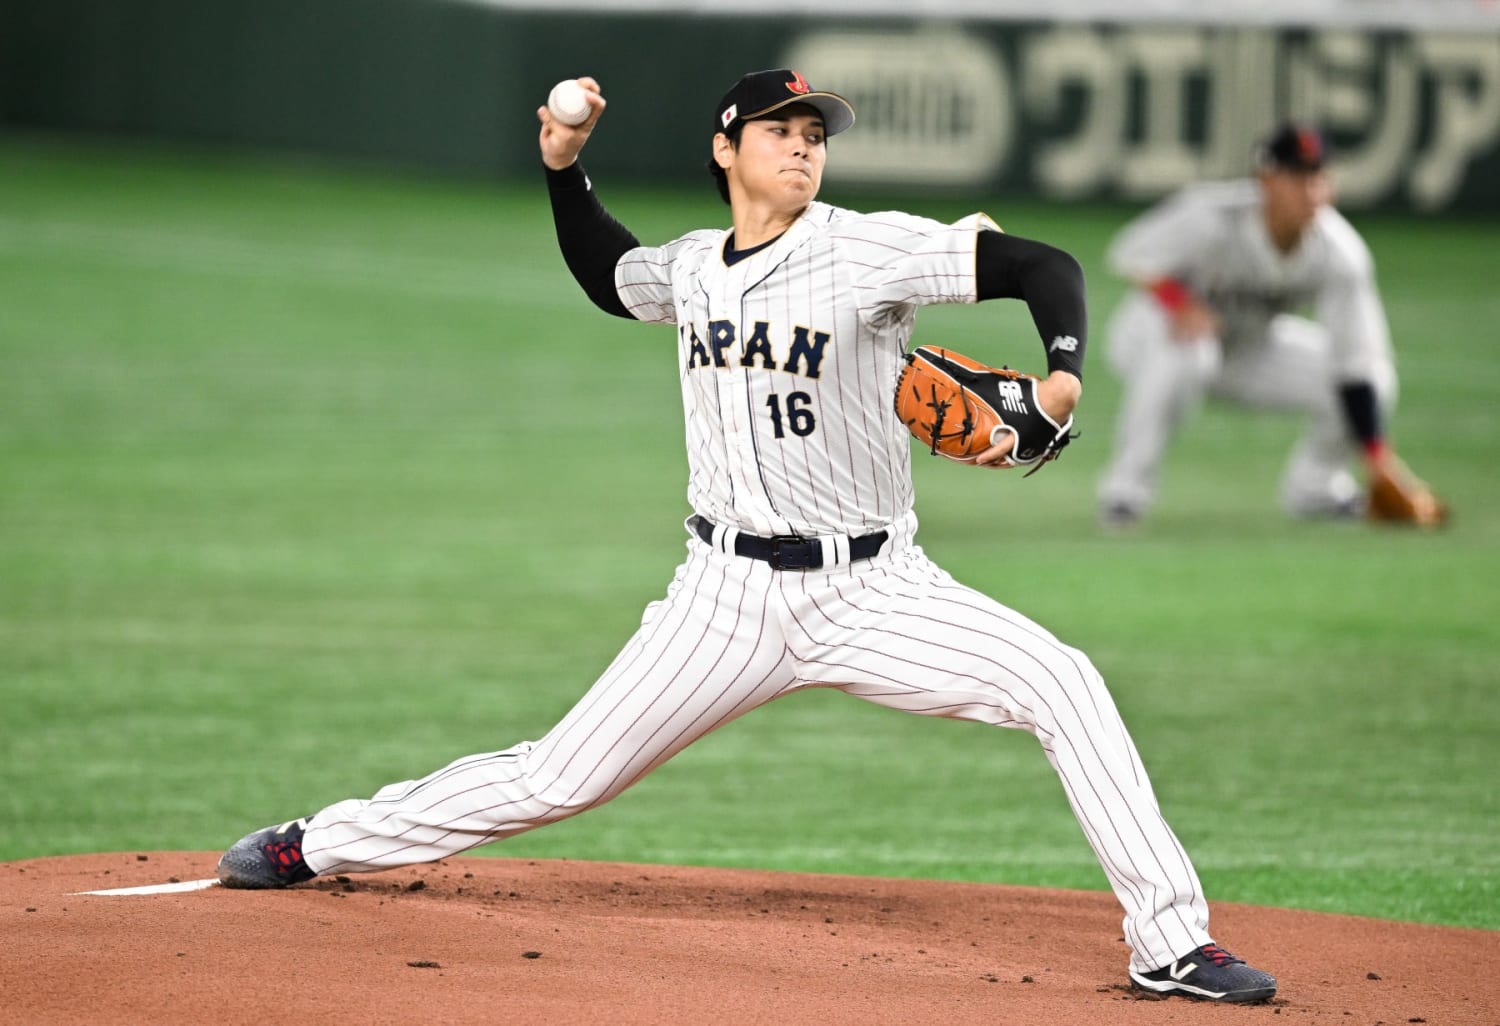 Talkin' Baseball on X: Shohei Ohtani is the 2023 WBC MVP! https